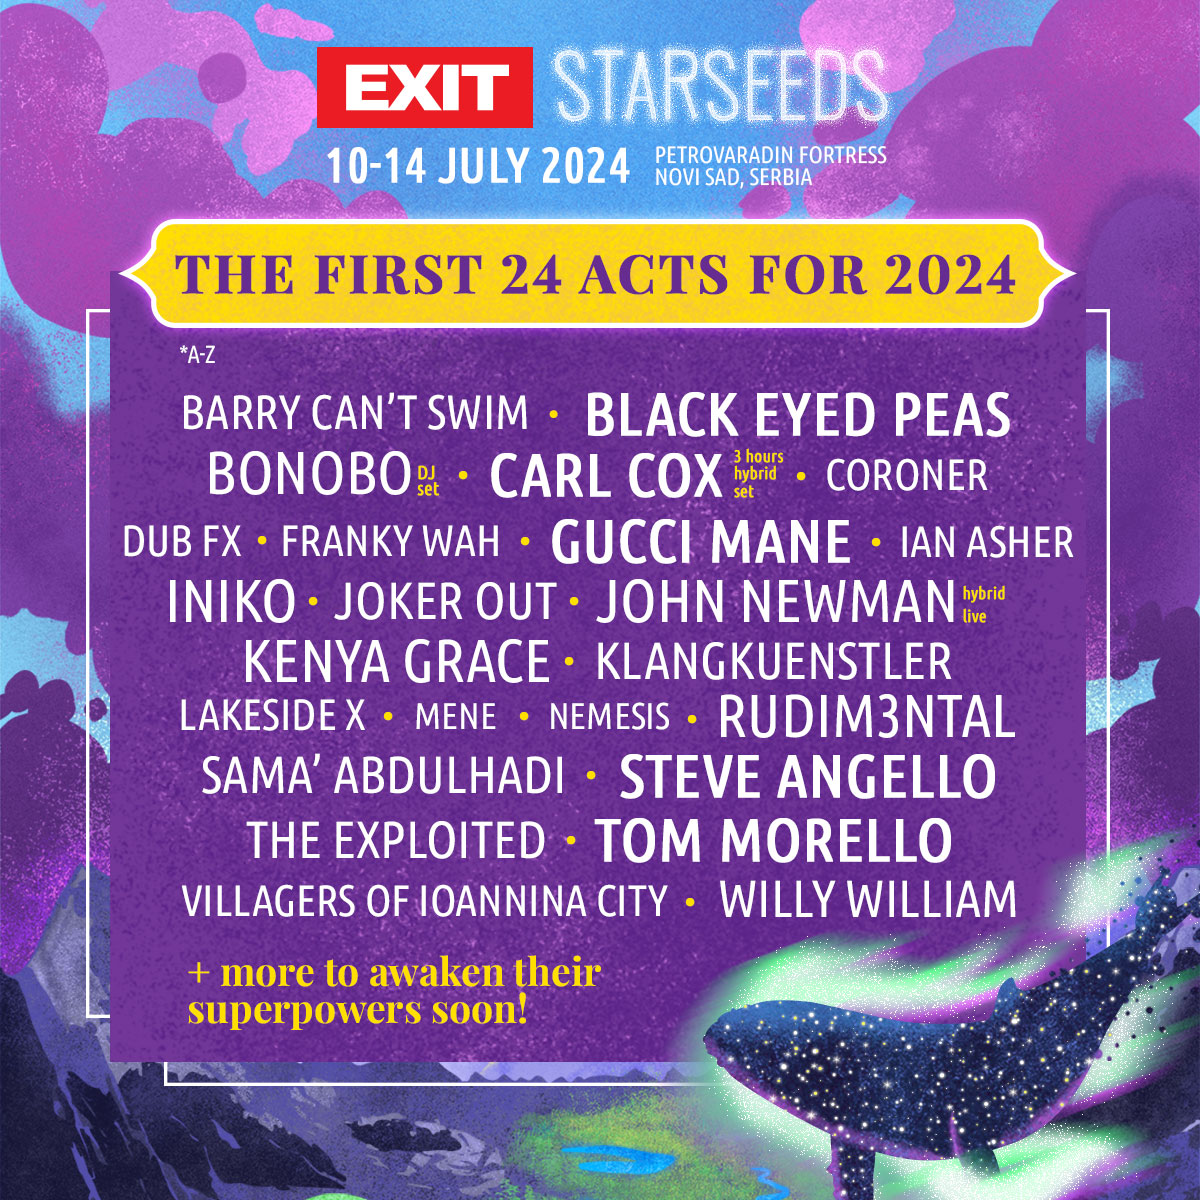 EXIT Starseeds Lineup